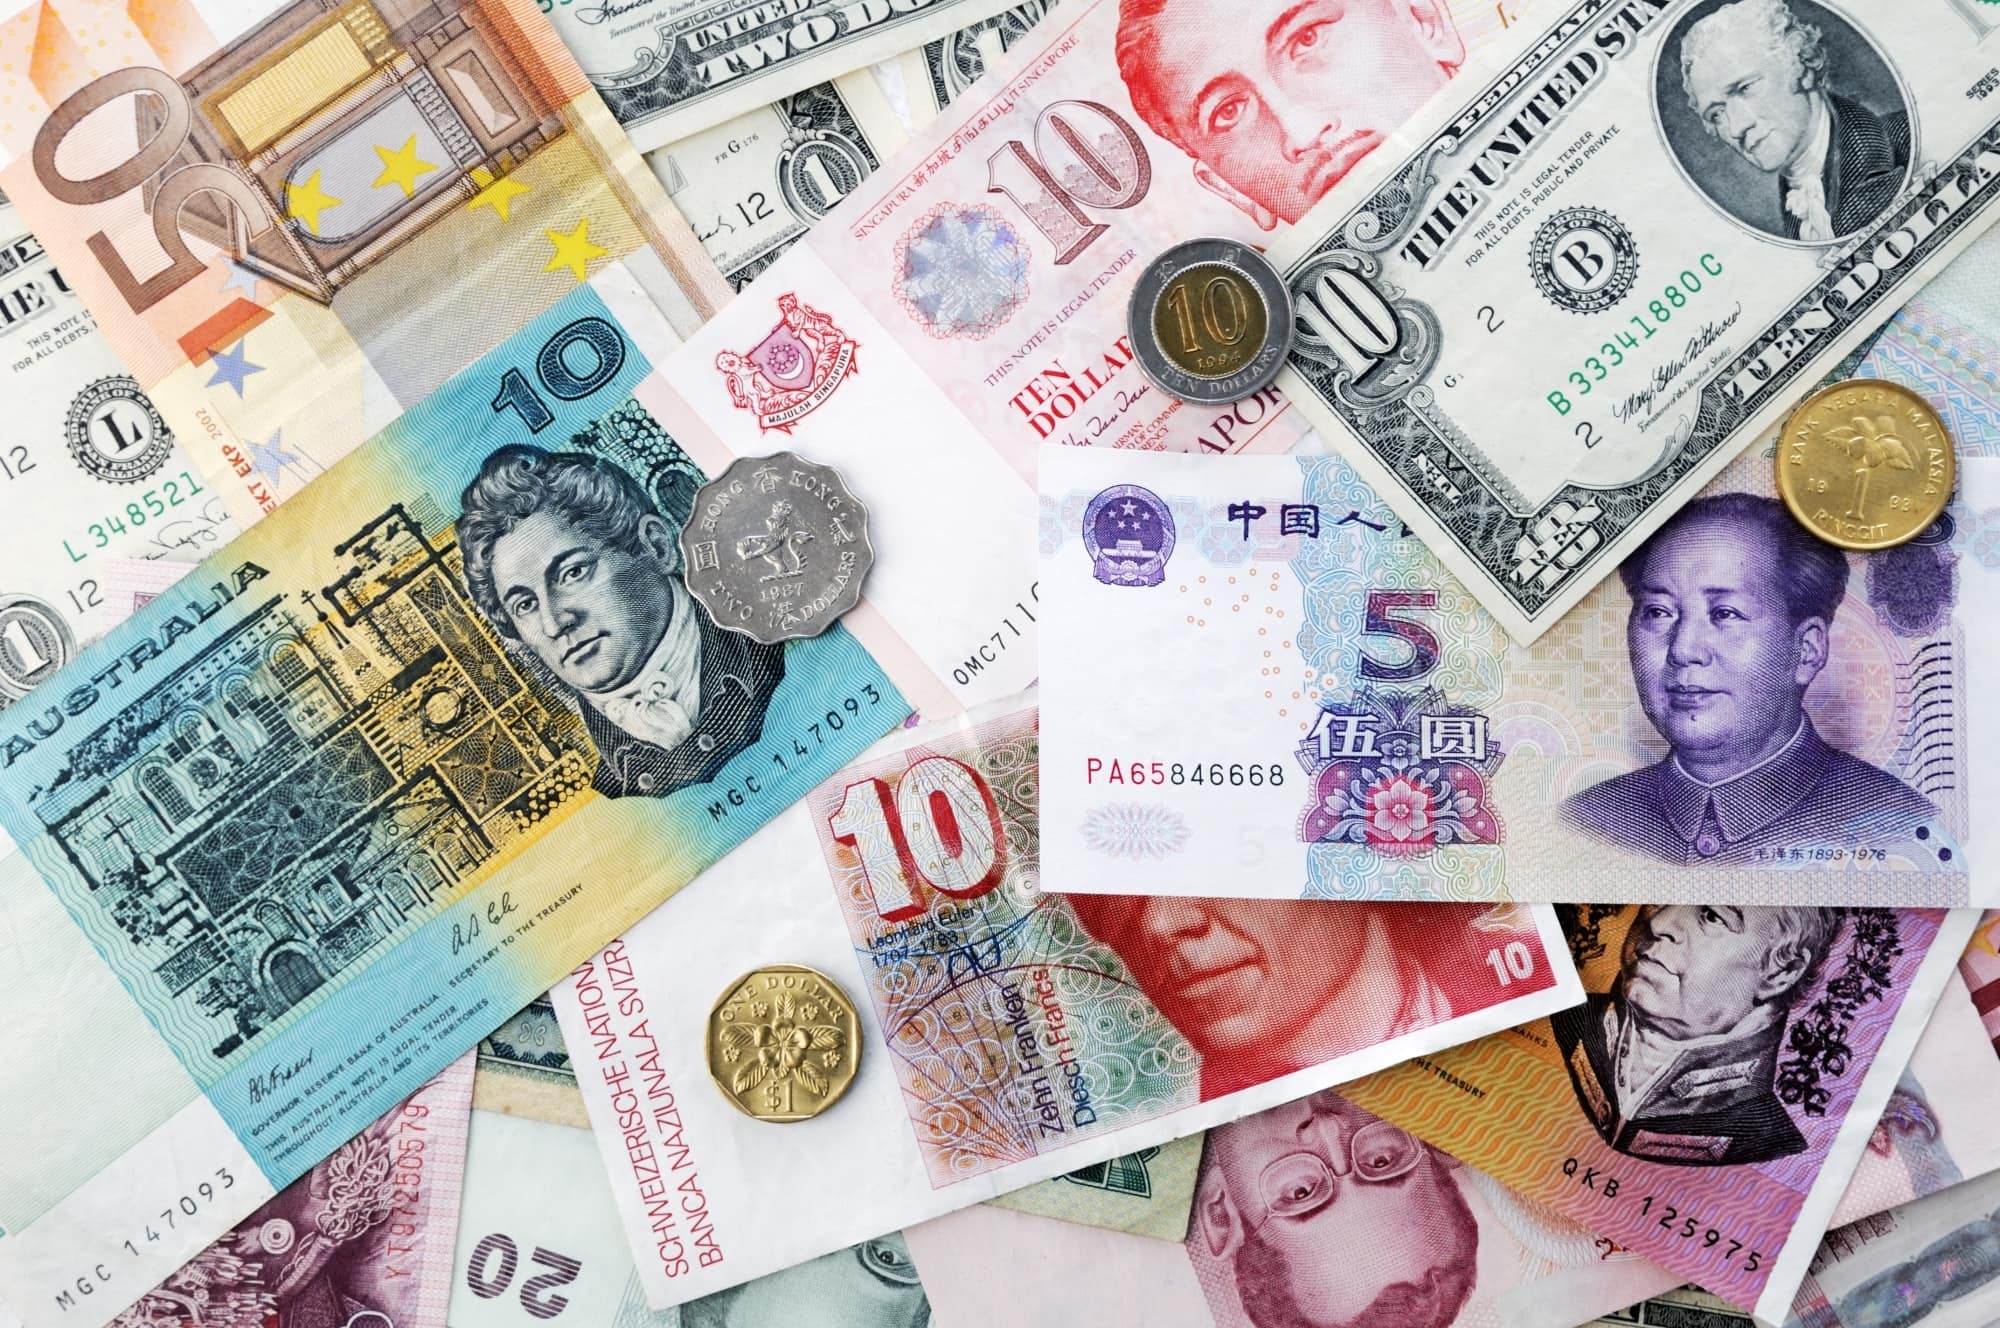 Currency me. Иностранная валюта. Банкноты разных стран. Валюта картинки. Разные валюты.